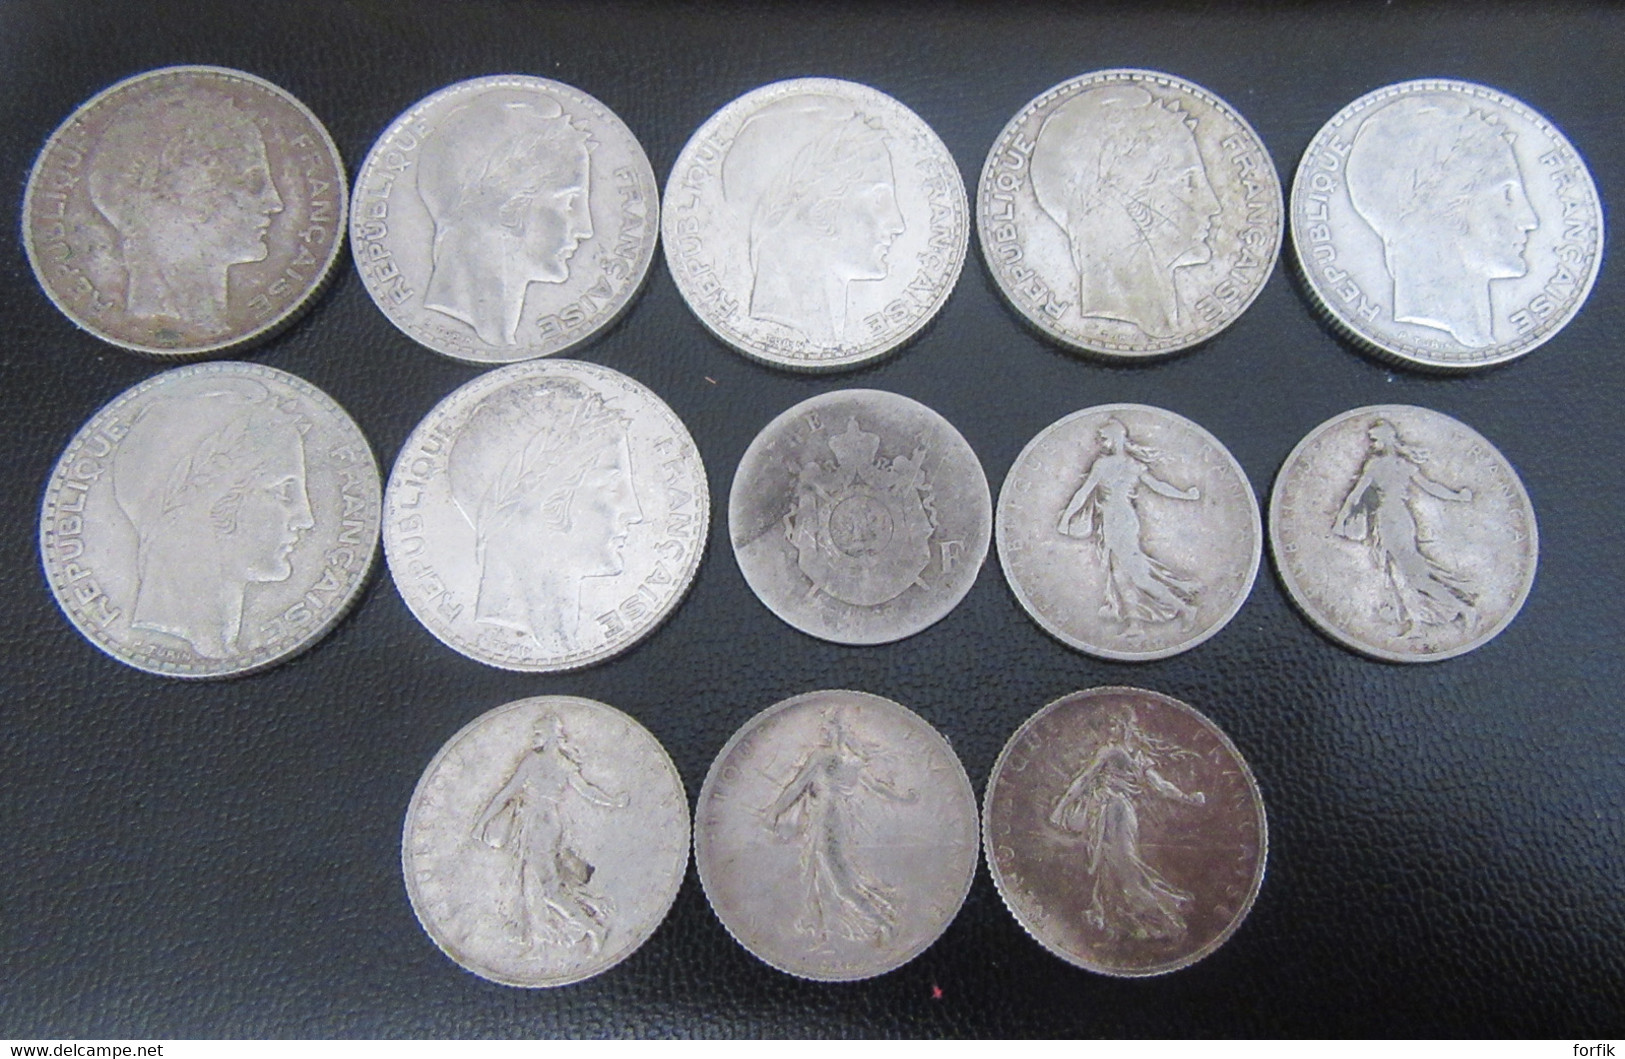 France - 13 Monnaies En Argent : 10 Francs Turin, 1 Franc Semeuse + 1 Franc Napoléon III état B - Poid Total : 98,8g - Collections